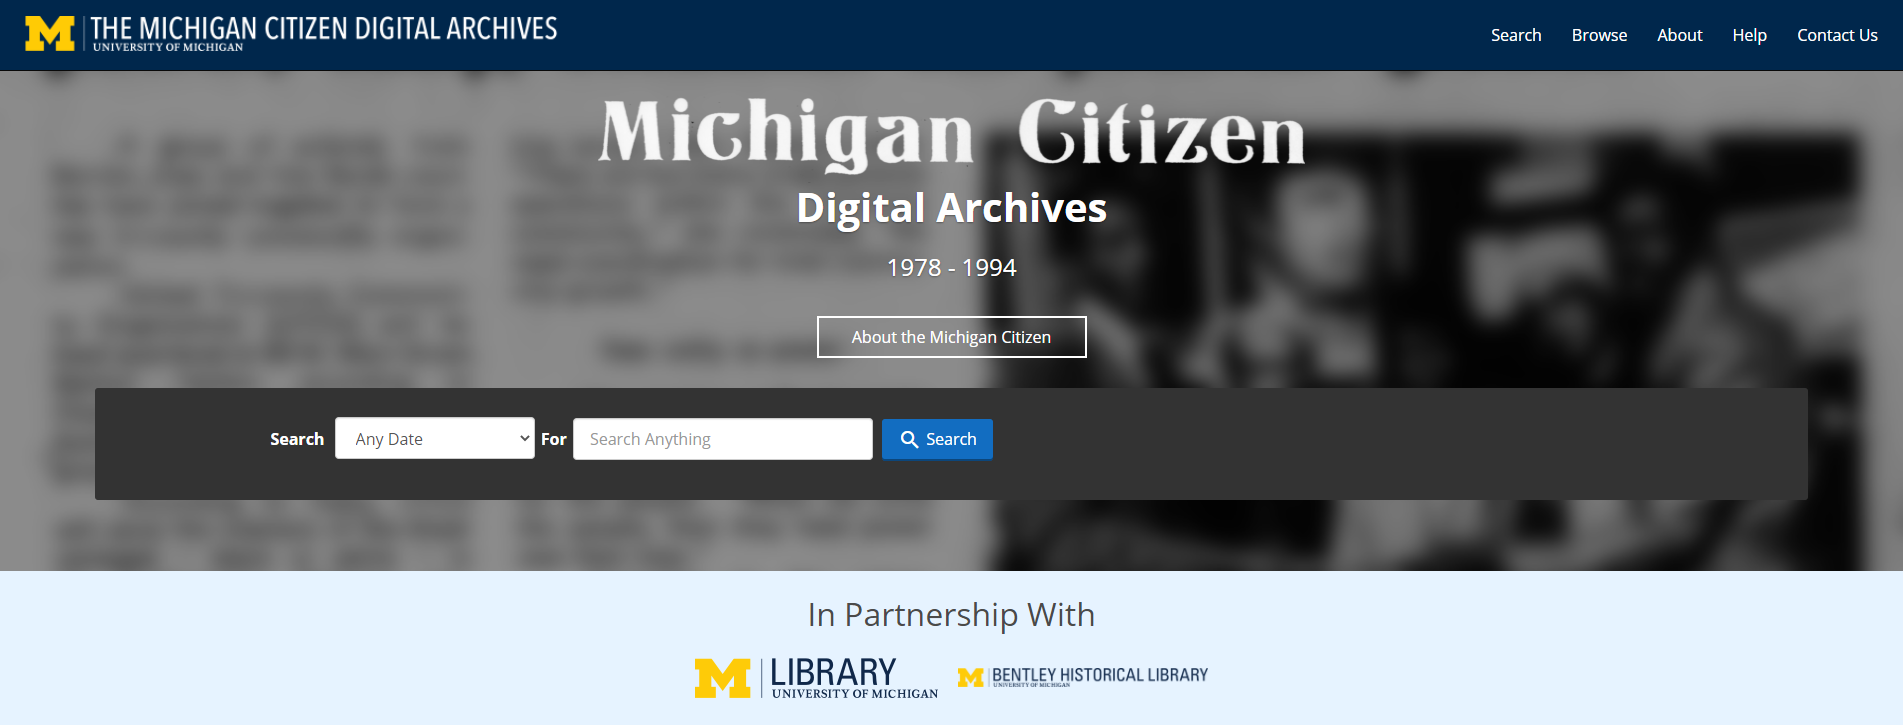 Michigan Citizen homepage.